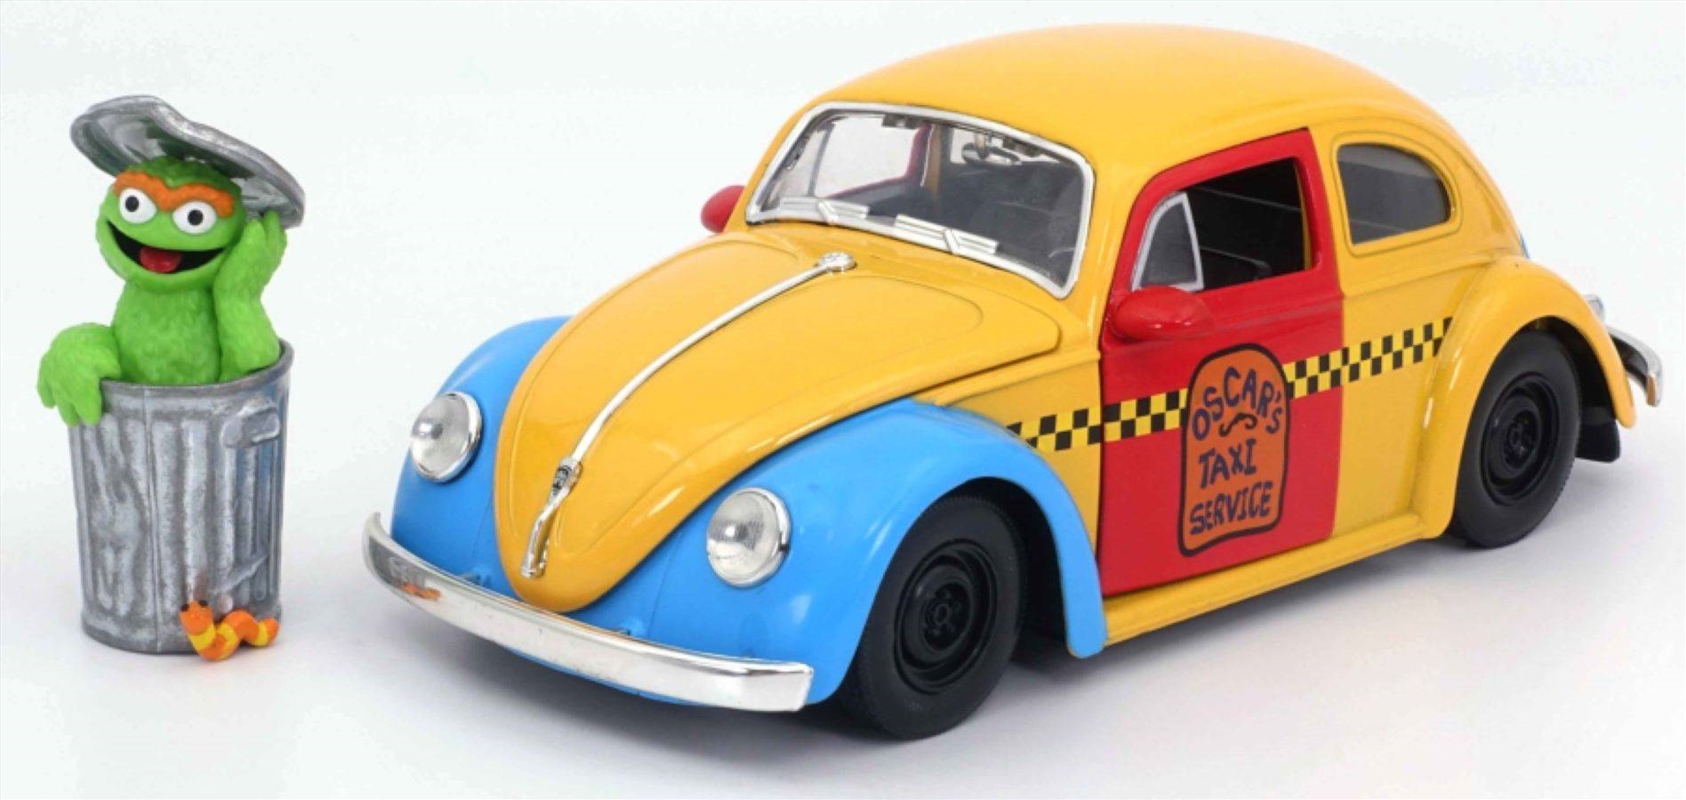 Sesame St - 1959 VW Beetle 1:32 Scale HR w/Oscar/Product Detail/Figurines